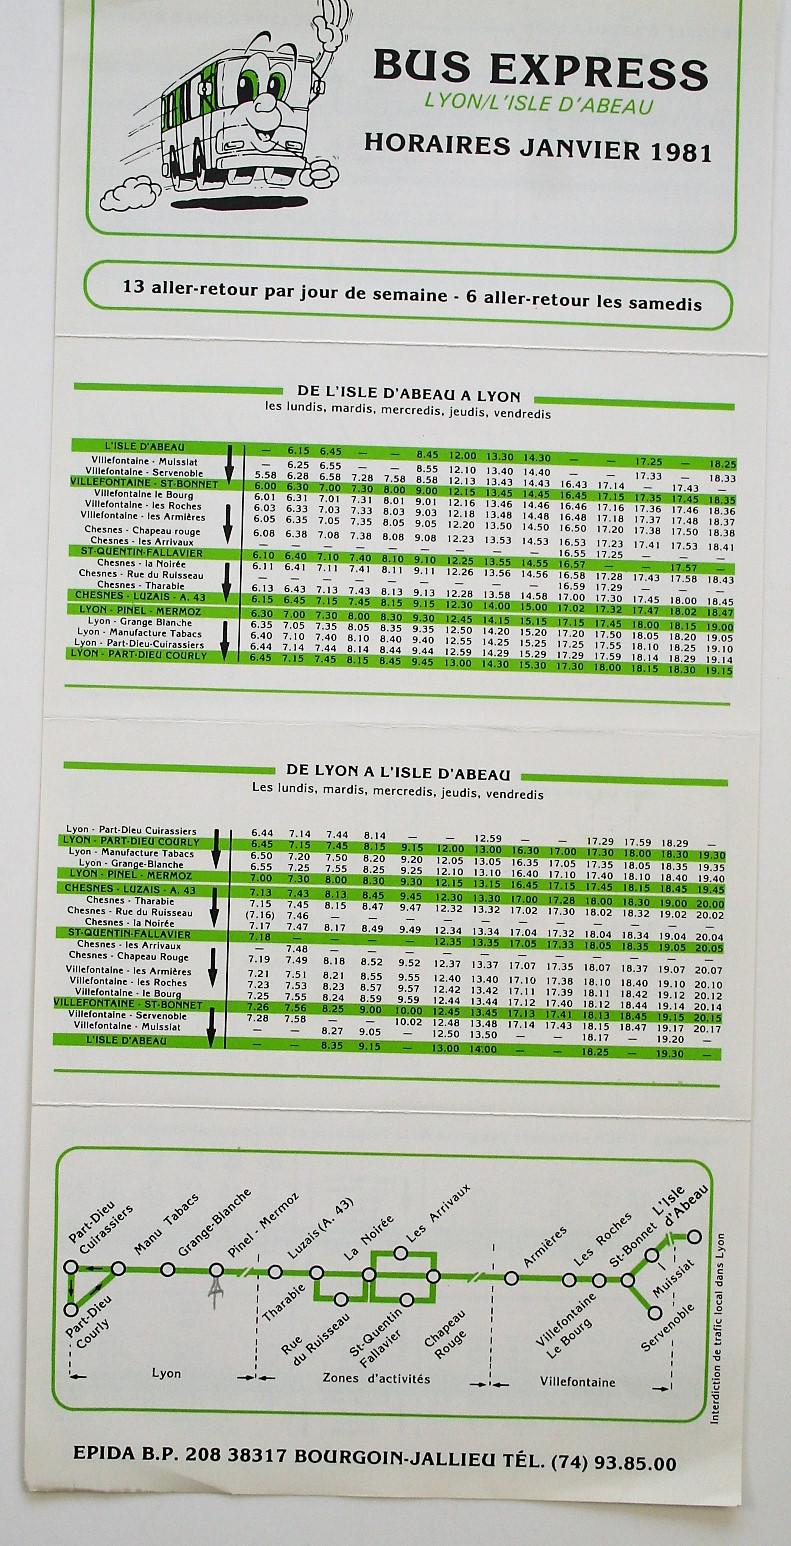 1991 timetable